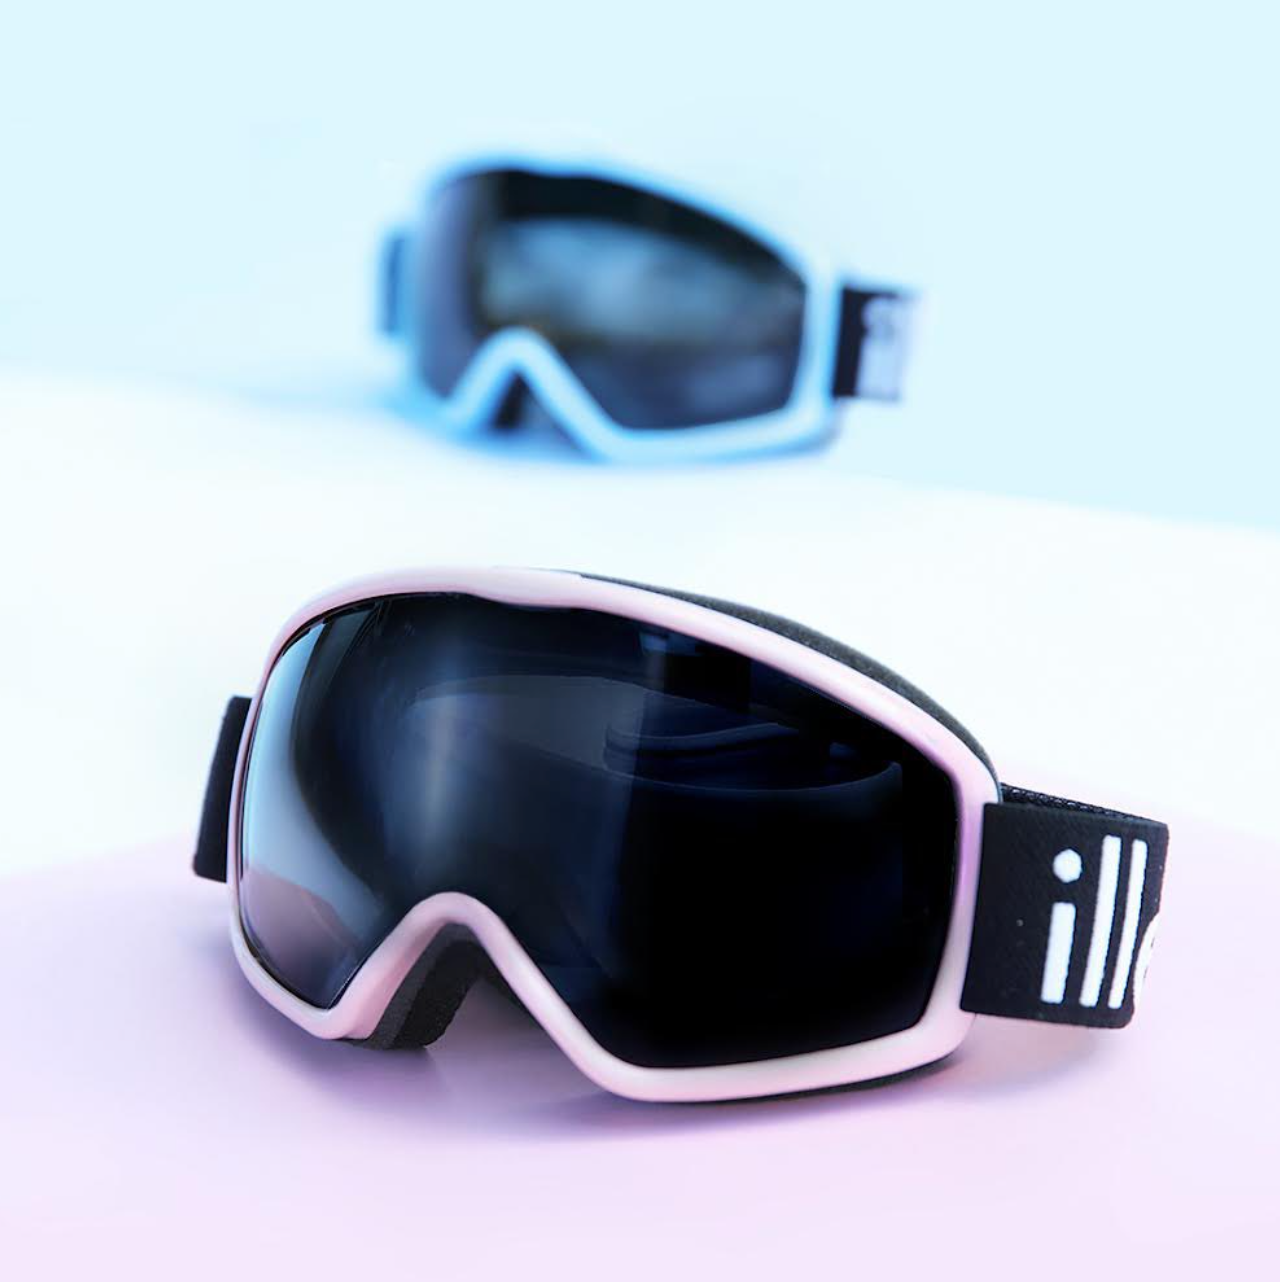 Ski goggles pale pink w grey polarized lenses